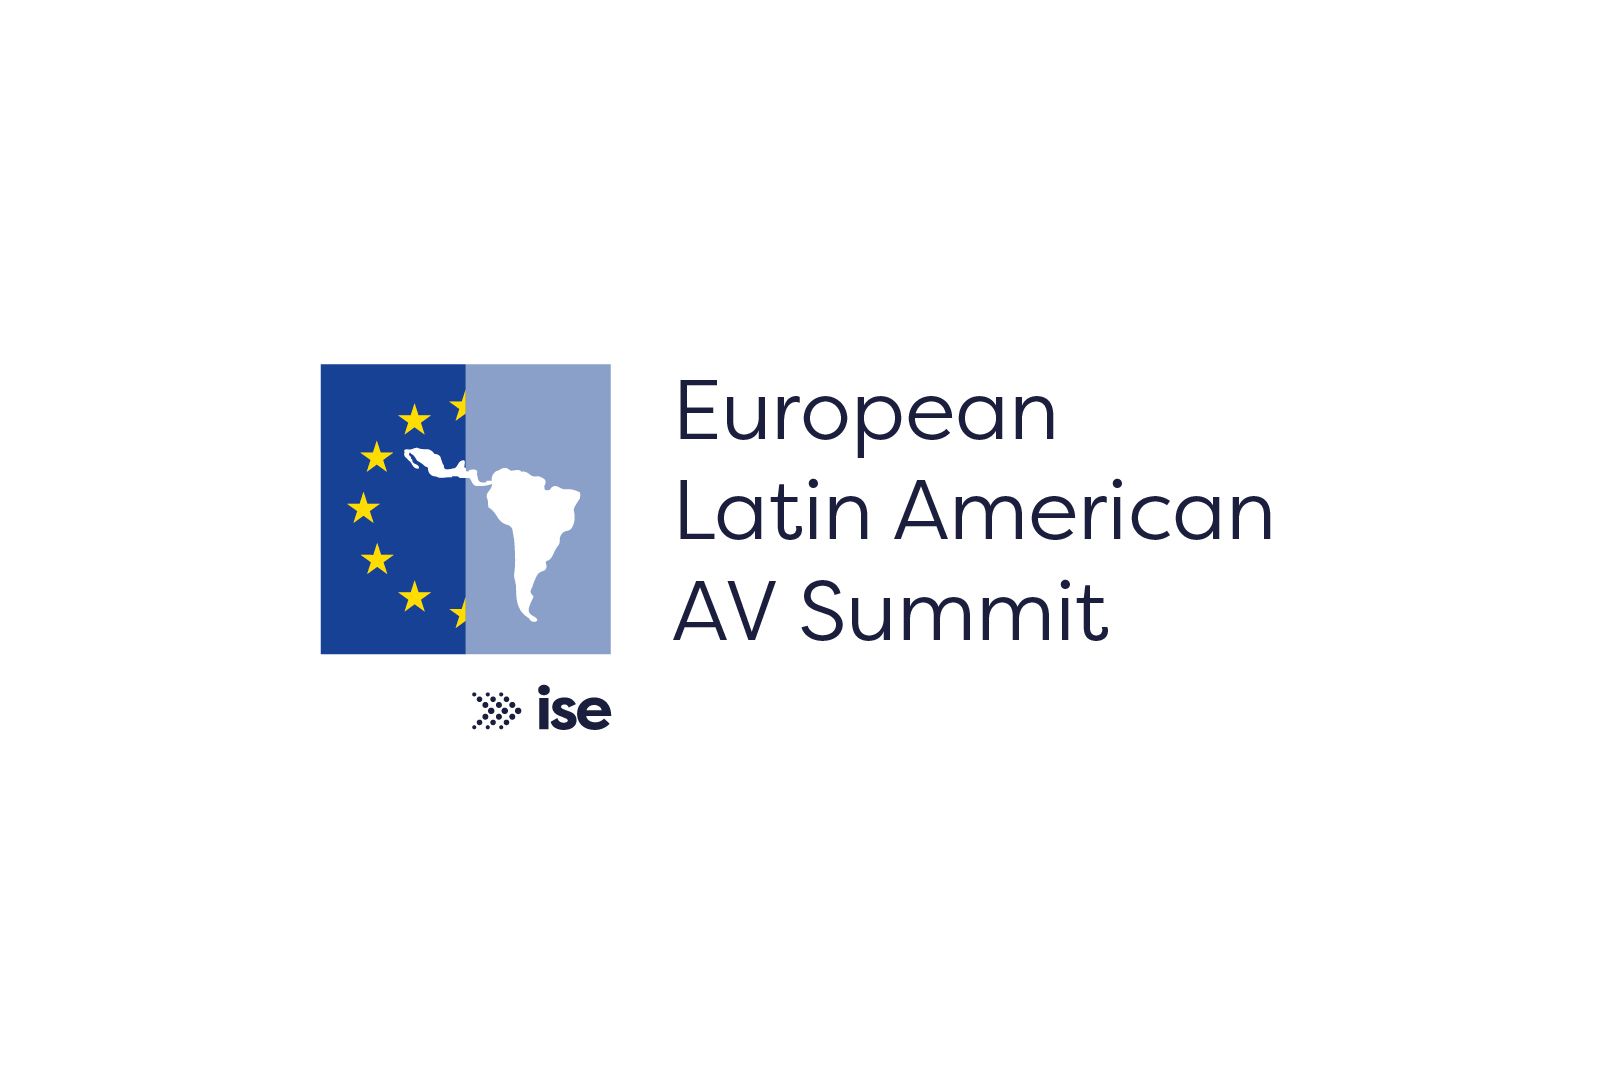 European / Latin American AV Summit will bridge continents with innovation